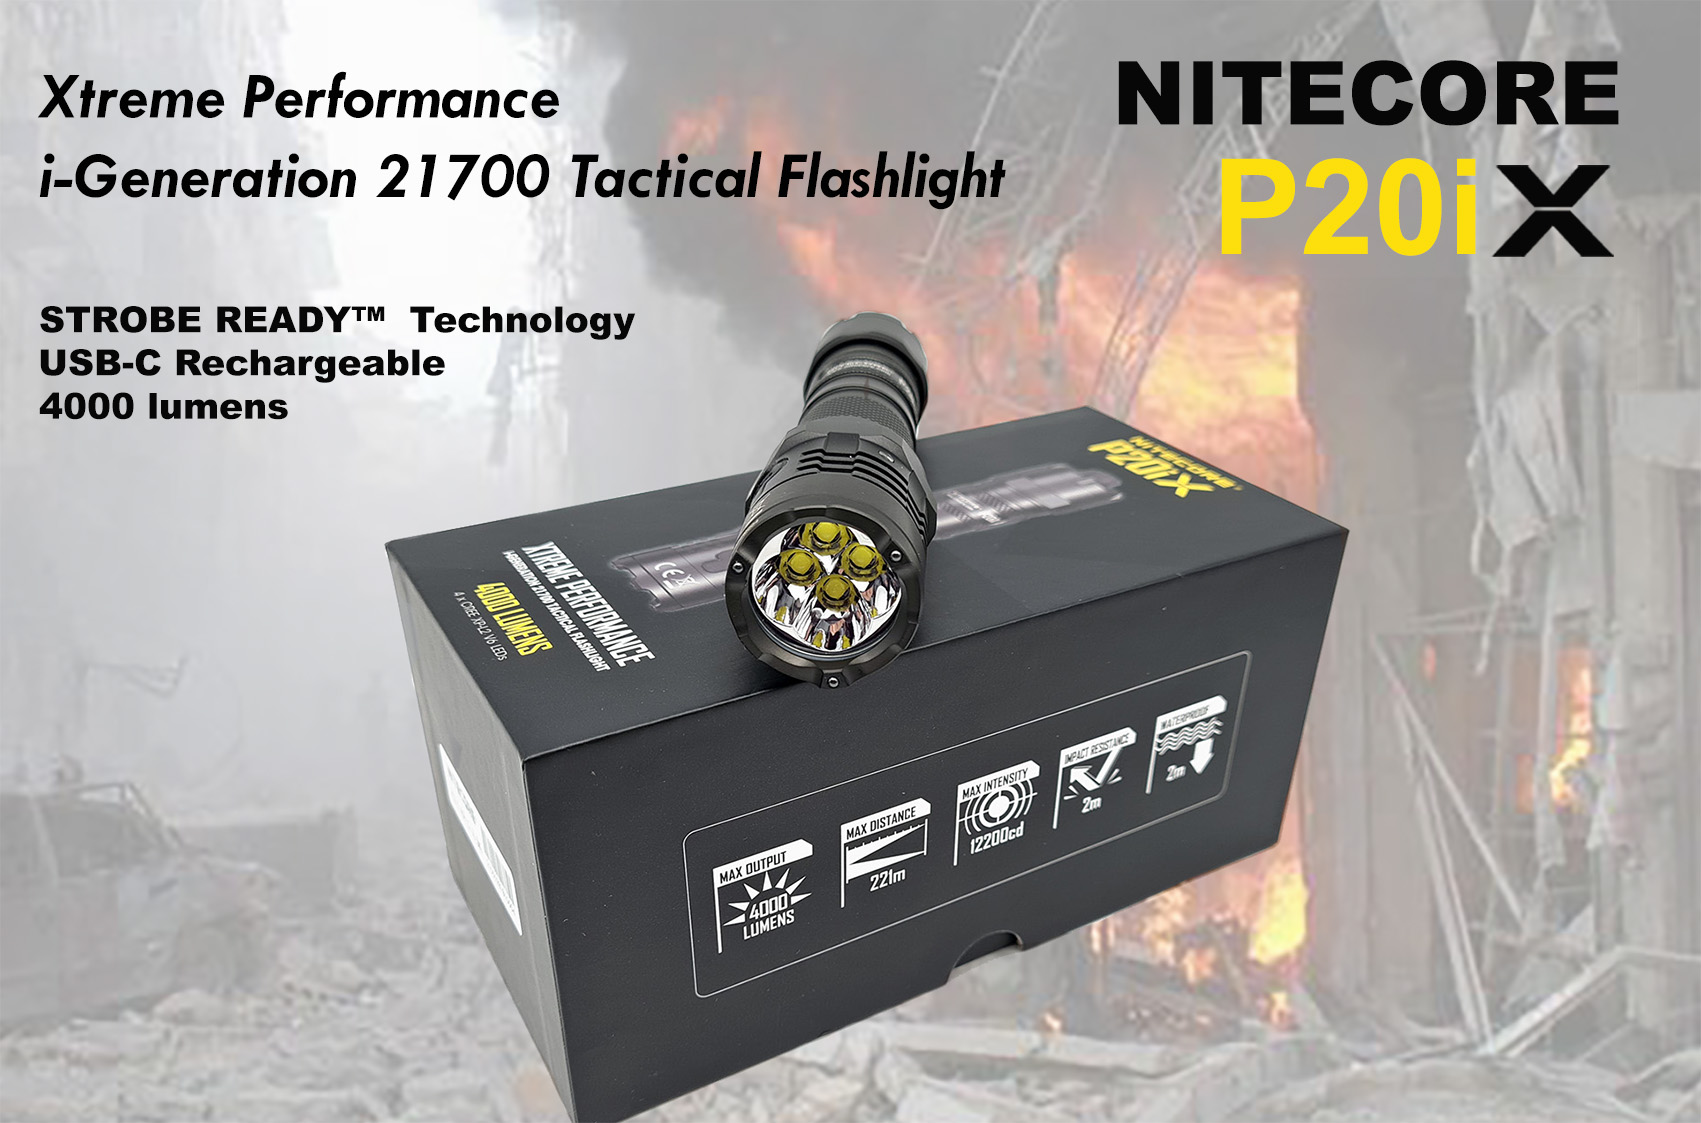 NITECORE P20iX Review - 4000 lumens - USB-C | Candle Power